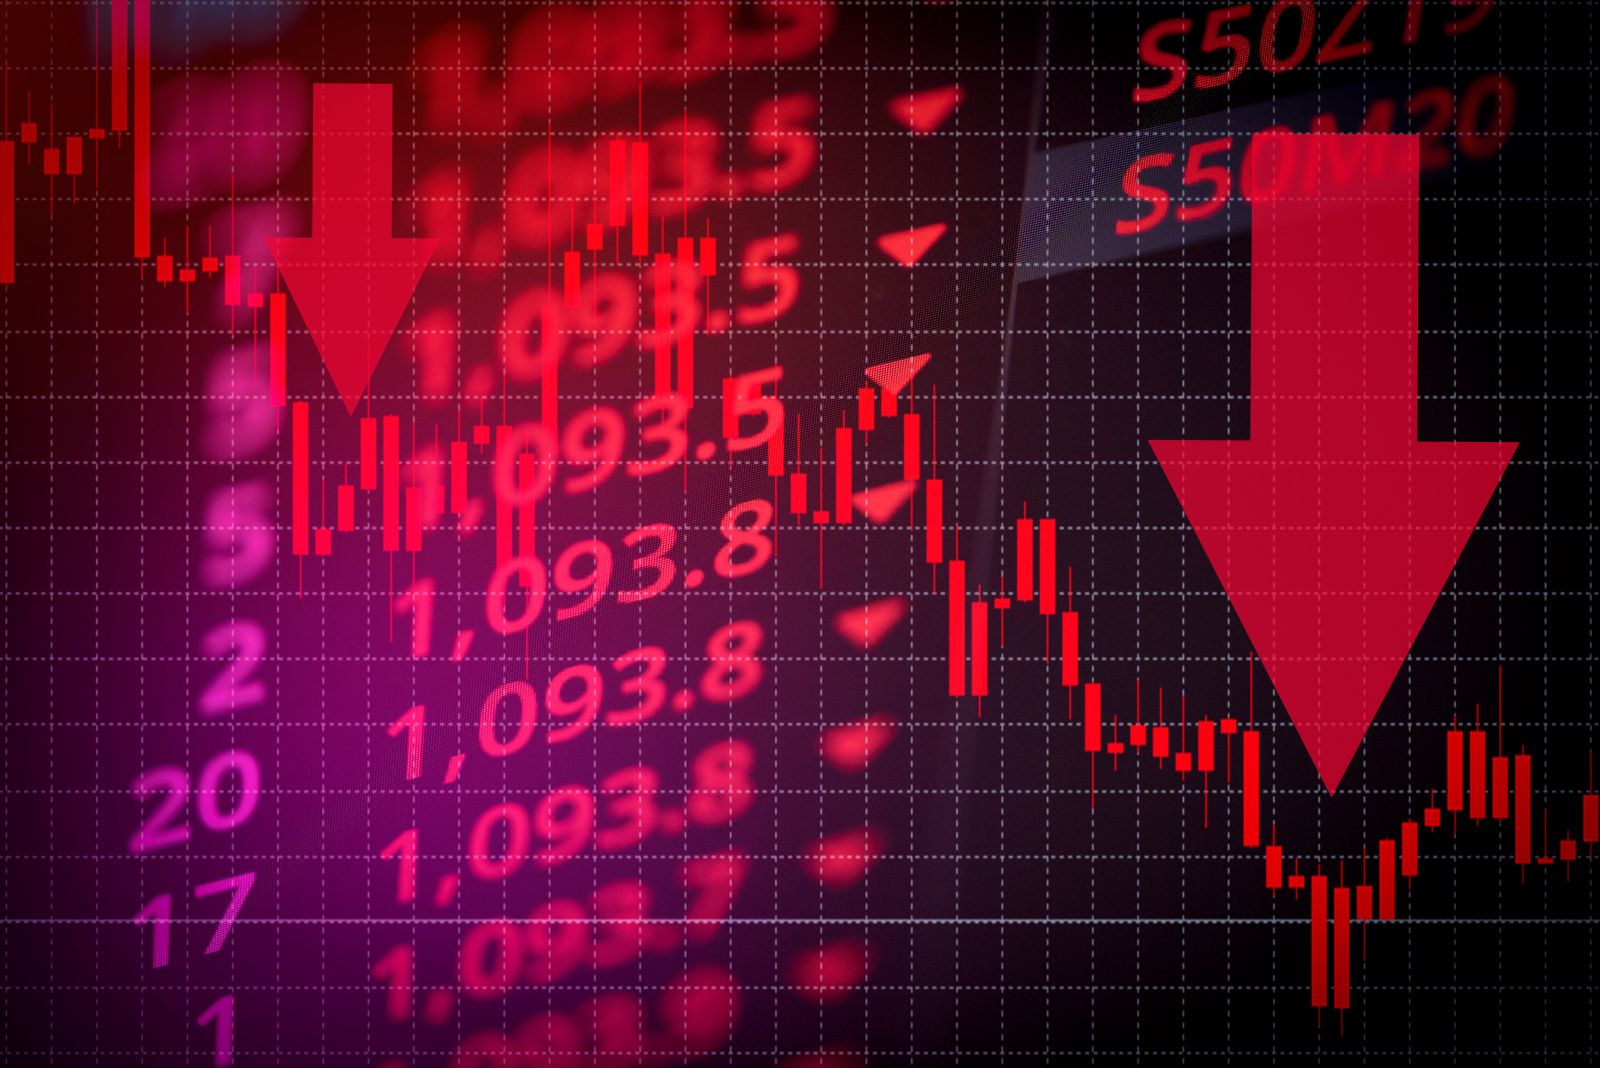 Charts, tickers, traders - Stock crash red market down by Bigc Studio via Shutterstock